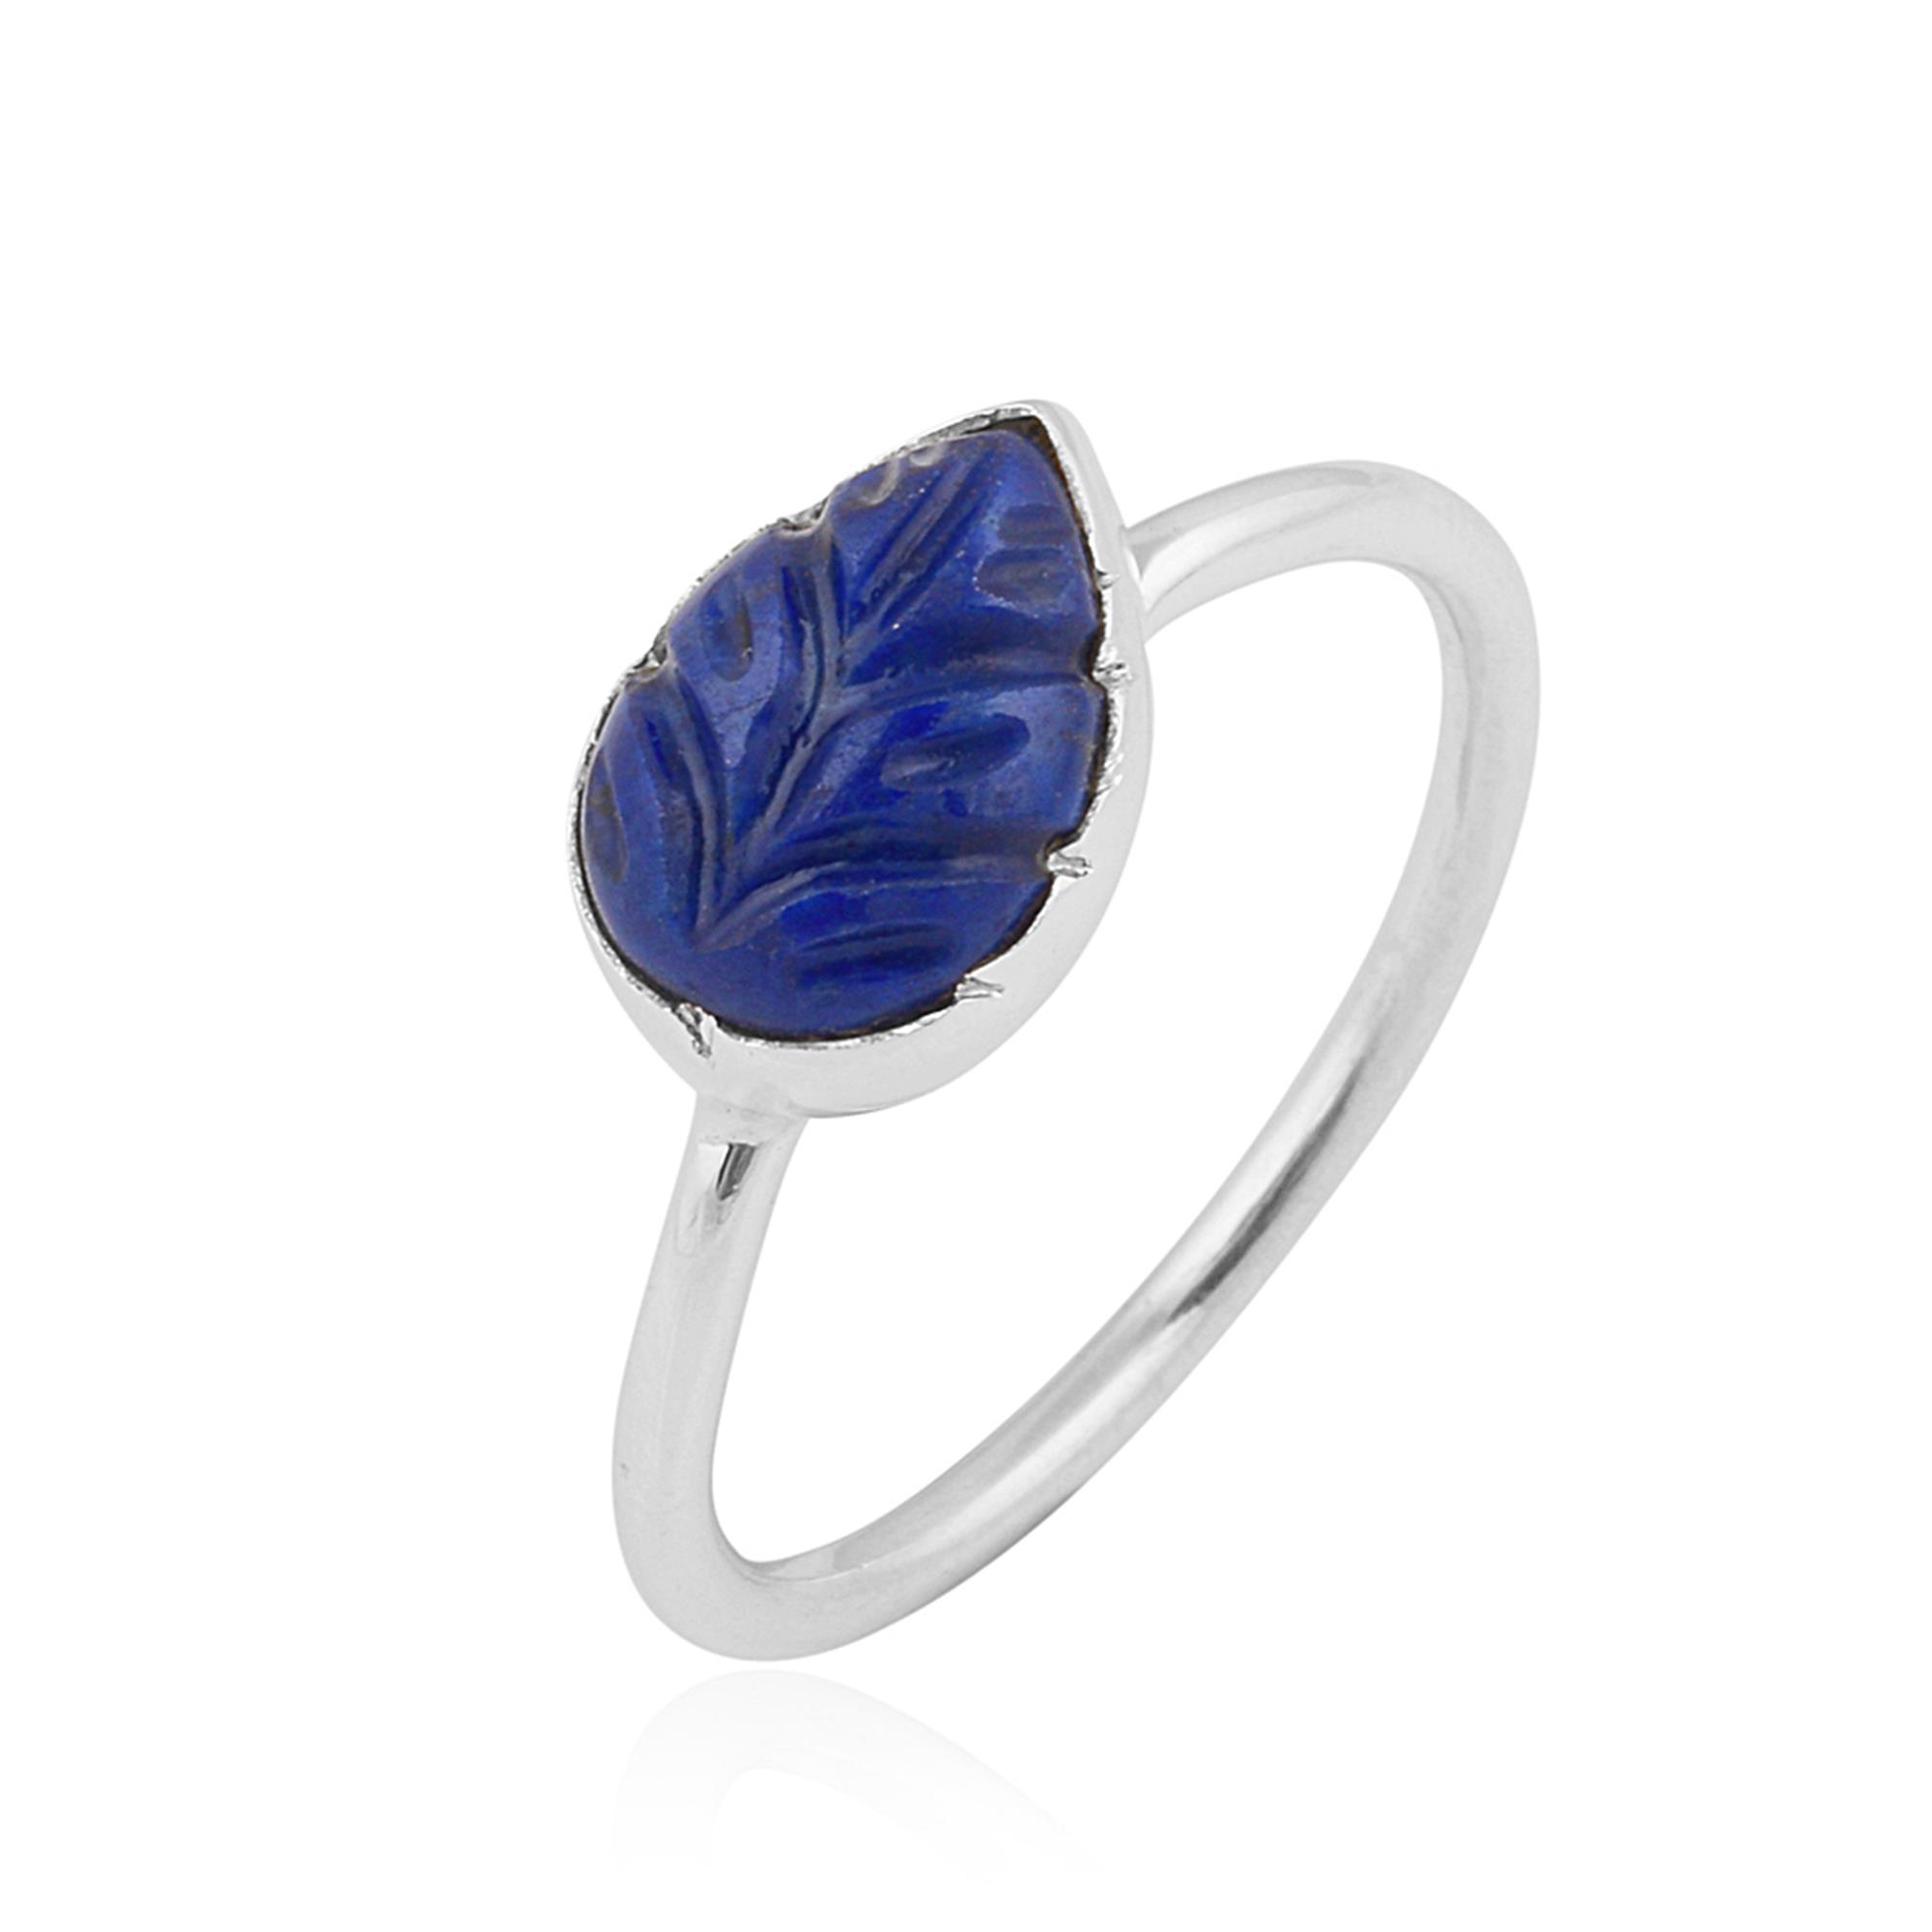 Handmade Carving Natural Lapis Lazuli Gemstone Sterling Silver Stackable Ring 